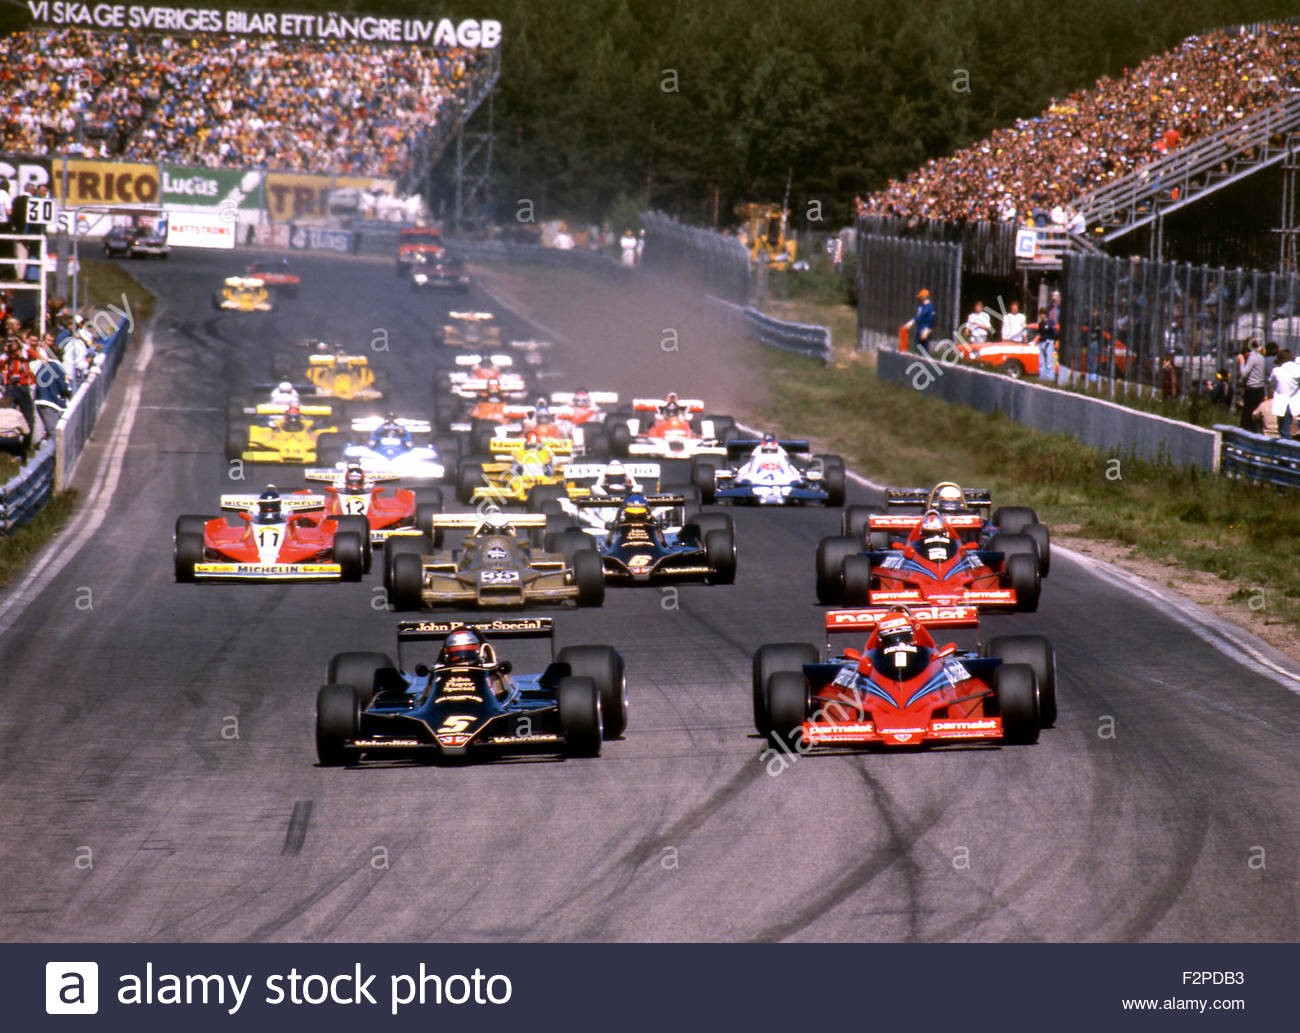 Old Brabham f1 car racing at Brands Hatch Stock Photo - Alamy